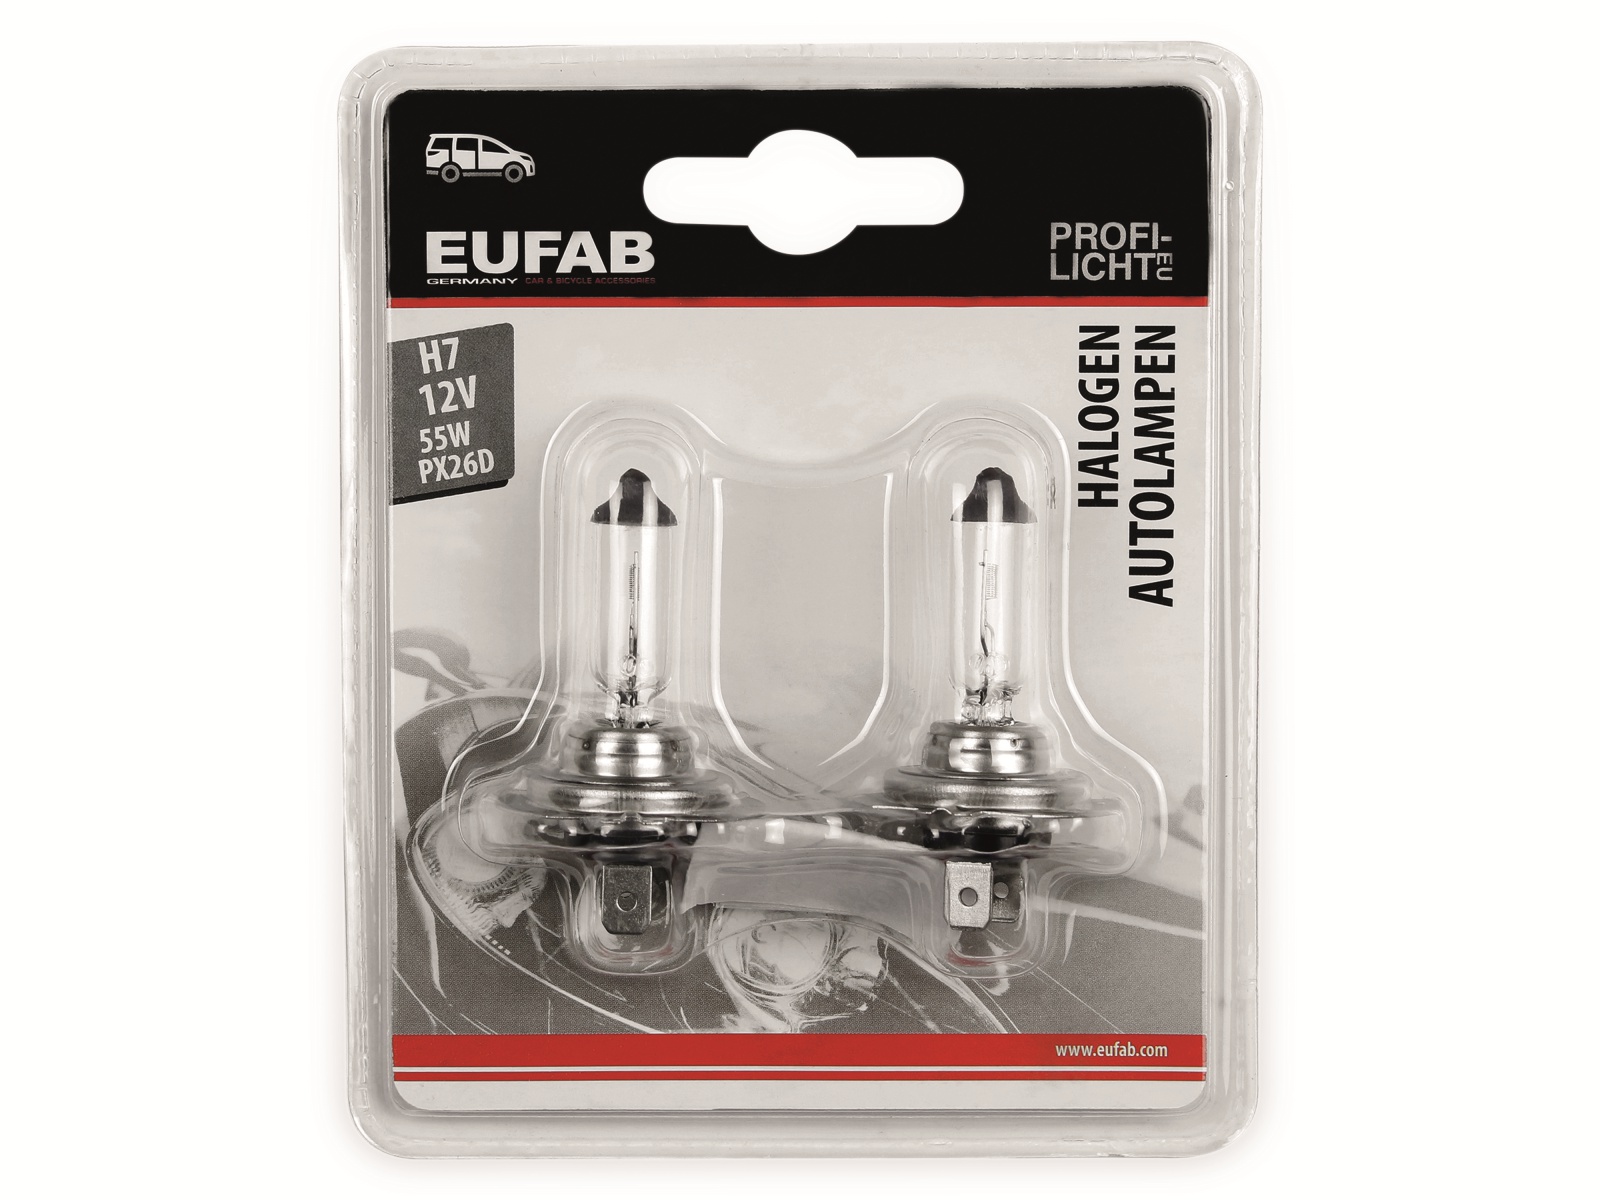 EUFAB Halogen-Autolampe H7, 12V, 55W, PX26D, 2 Stück